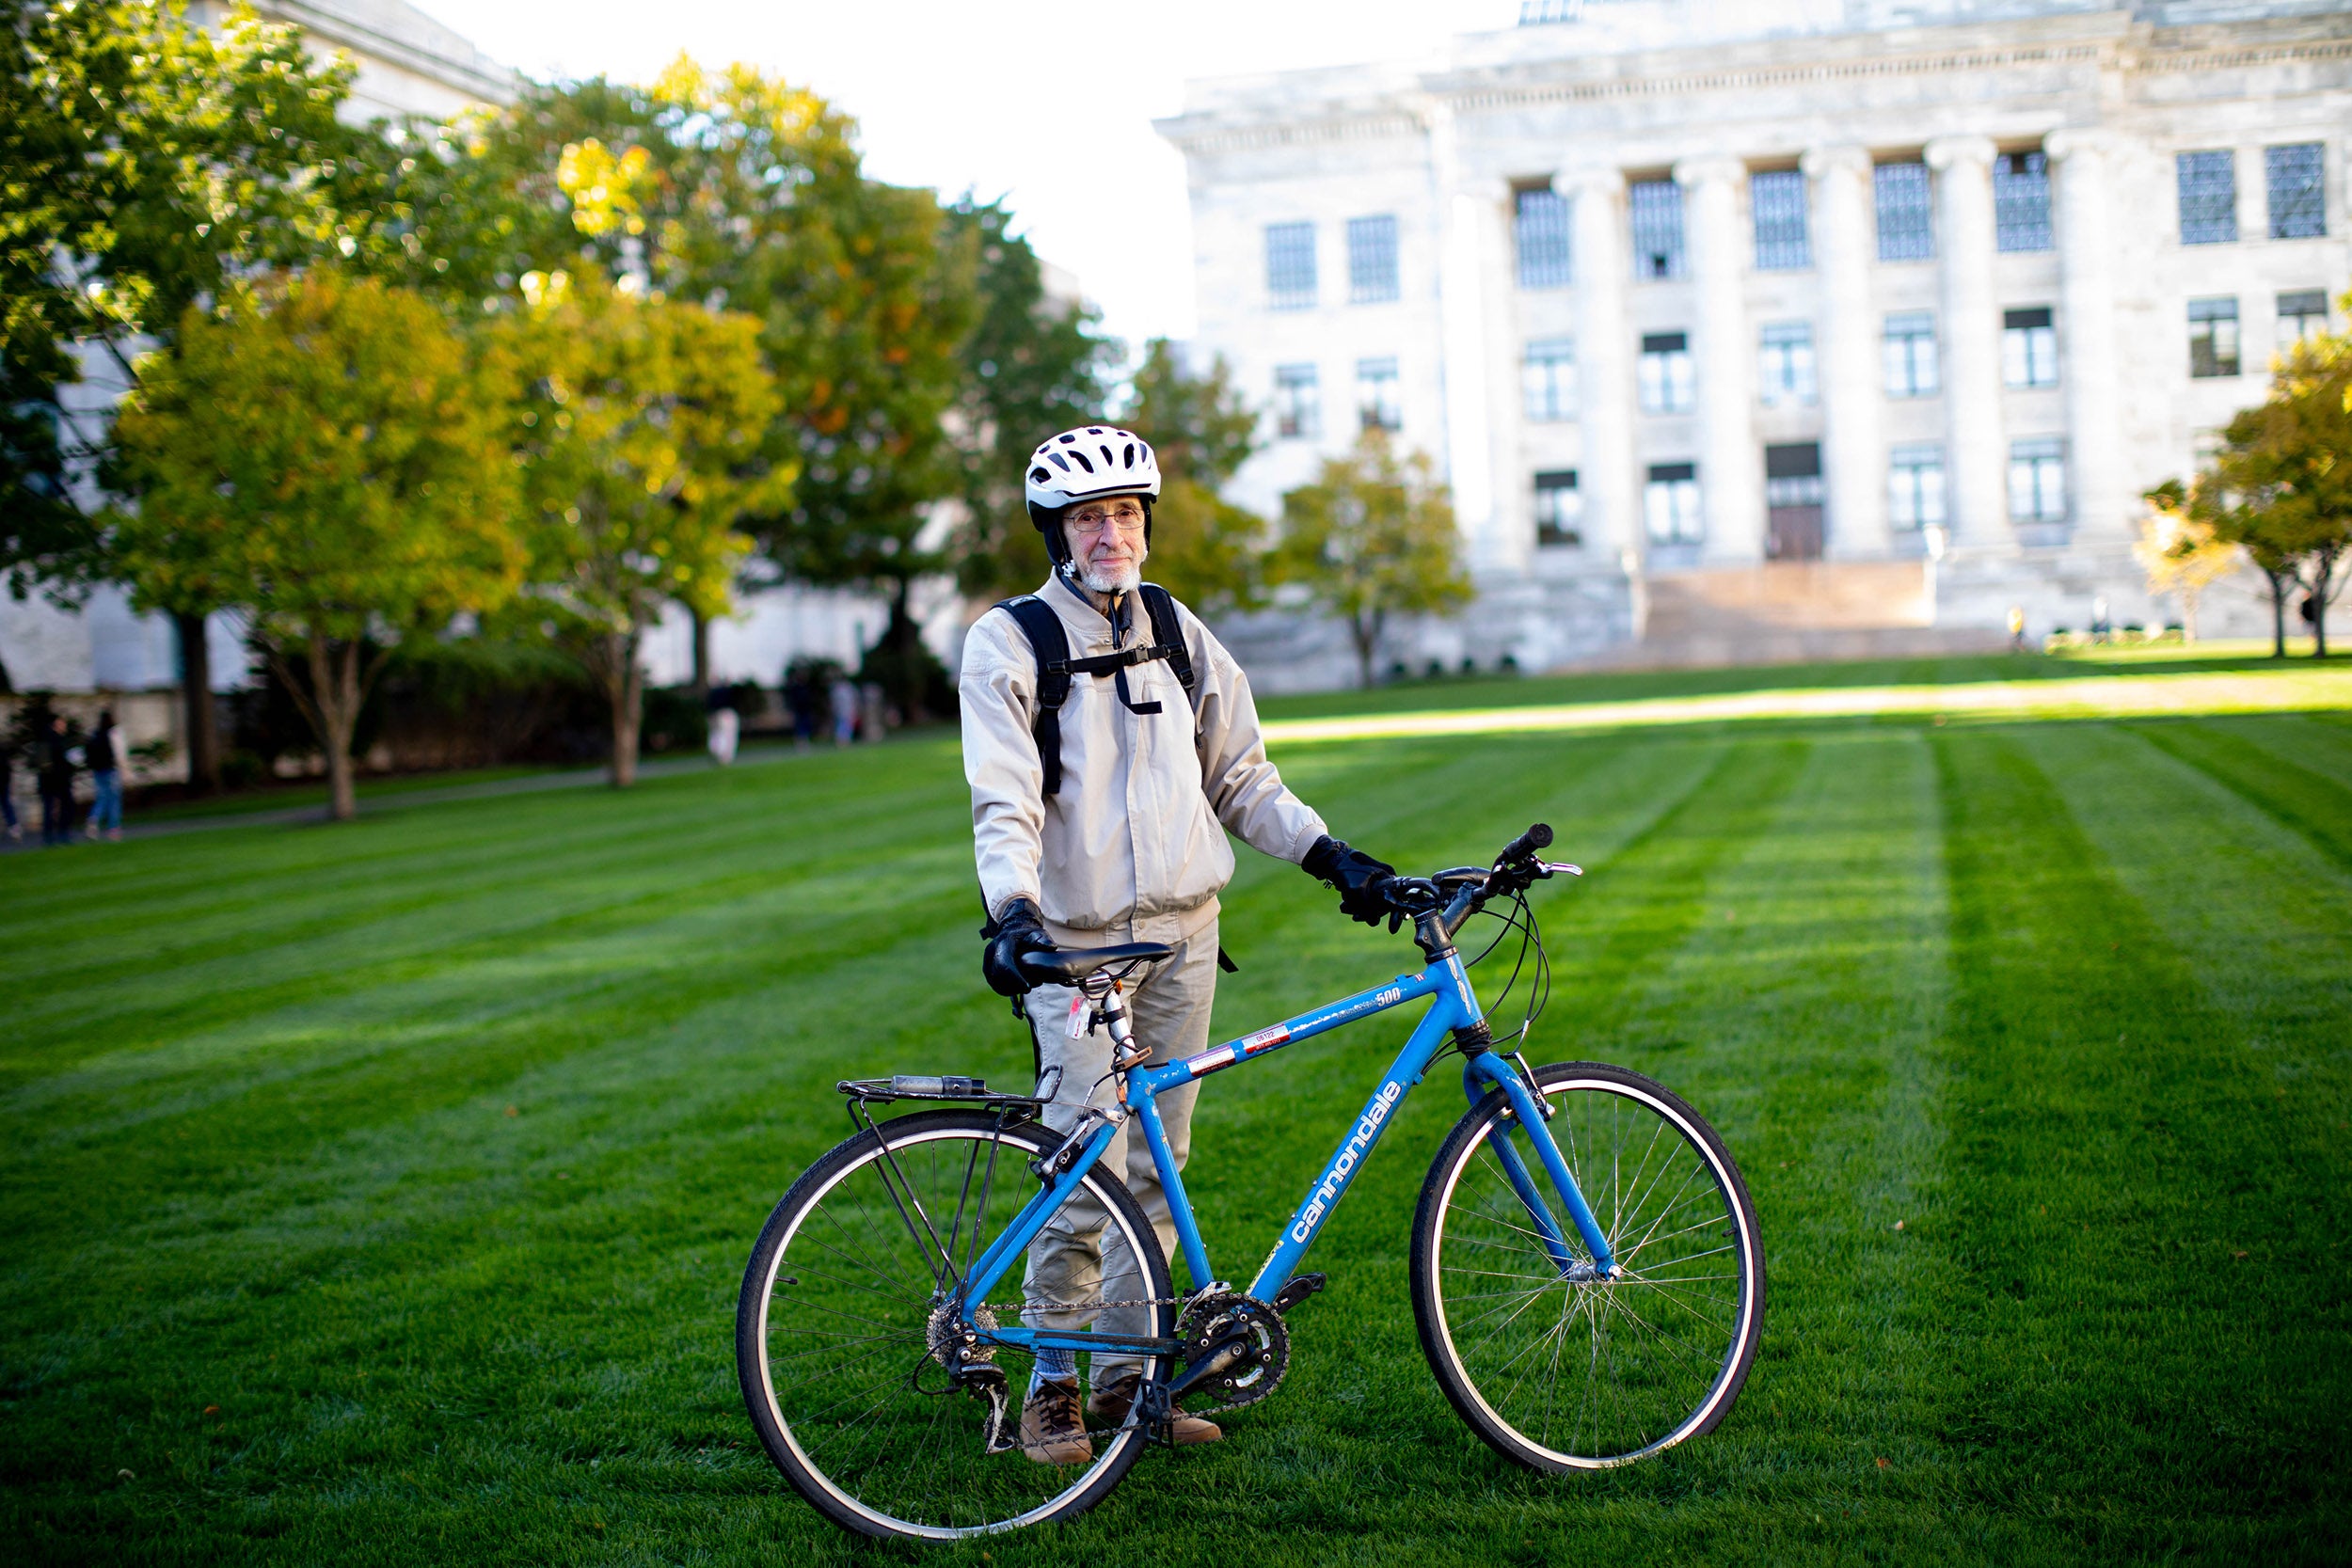 Jonathan Beckwith stands alongside his bicycle at Harvard Medical School.